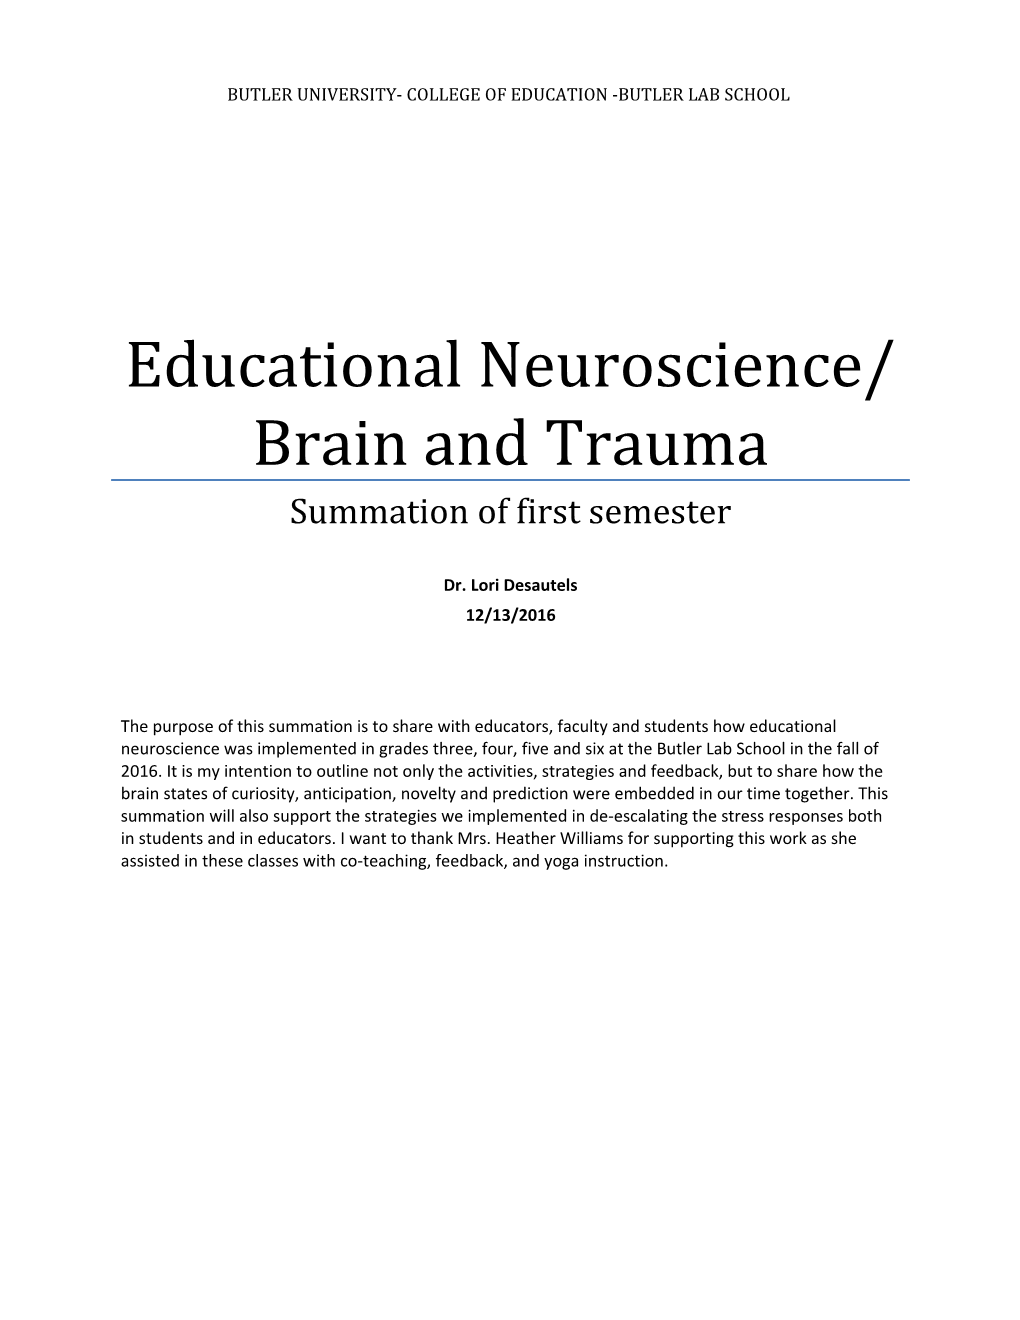 Educational Neuroscience/ Brain and Trauma